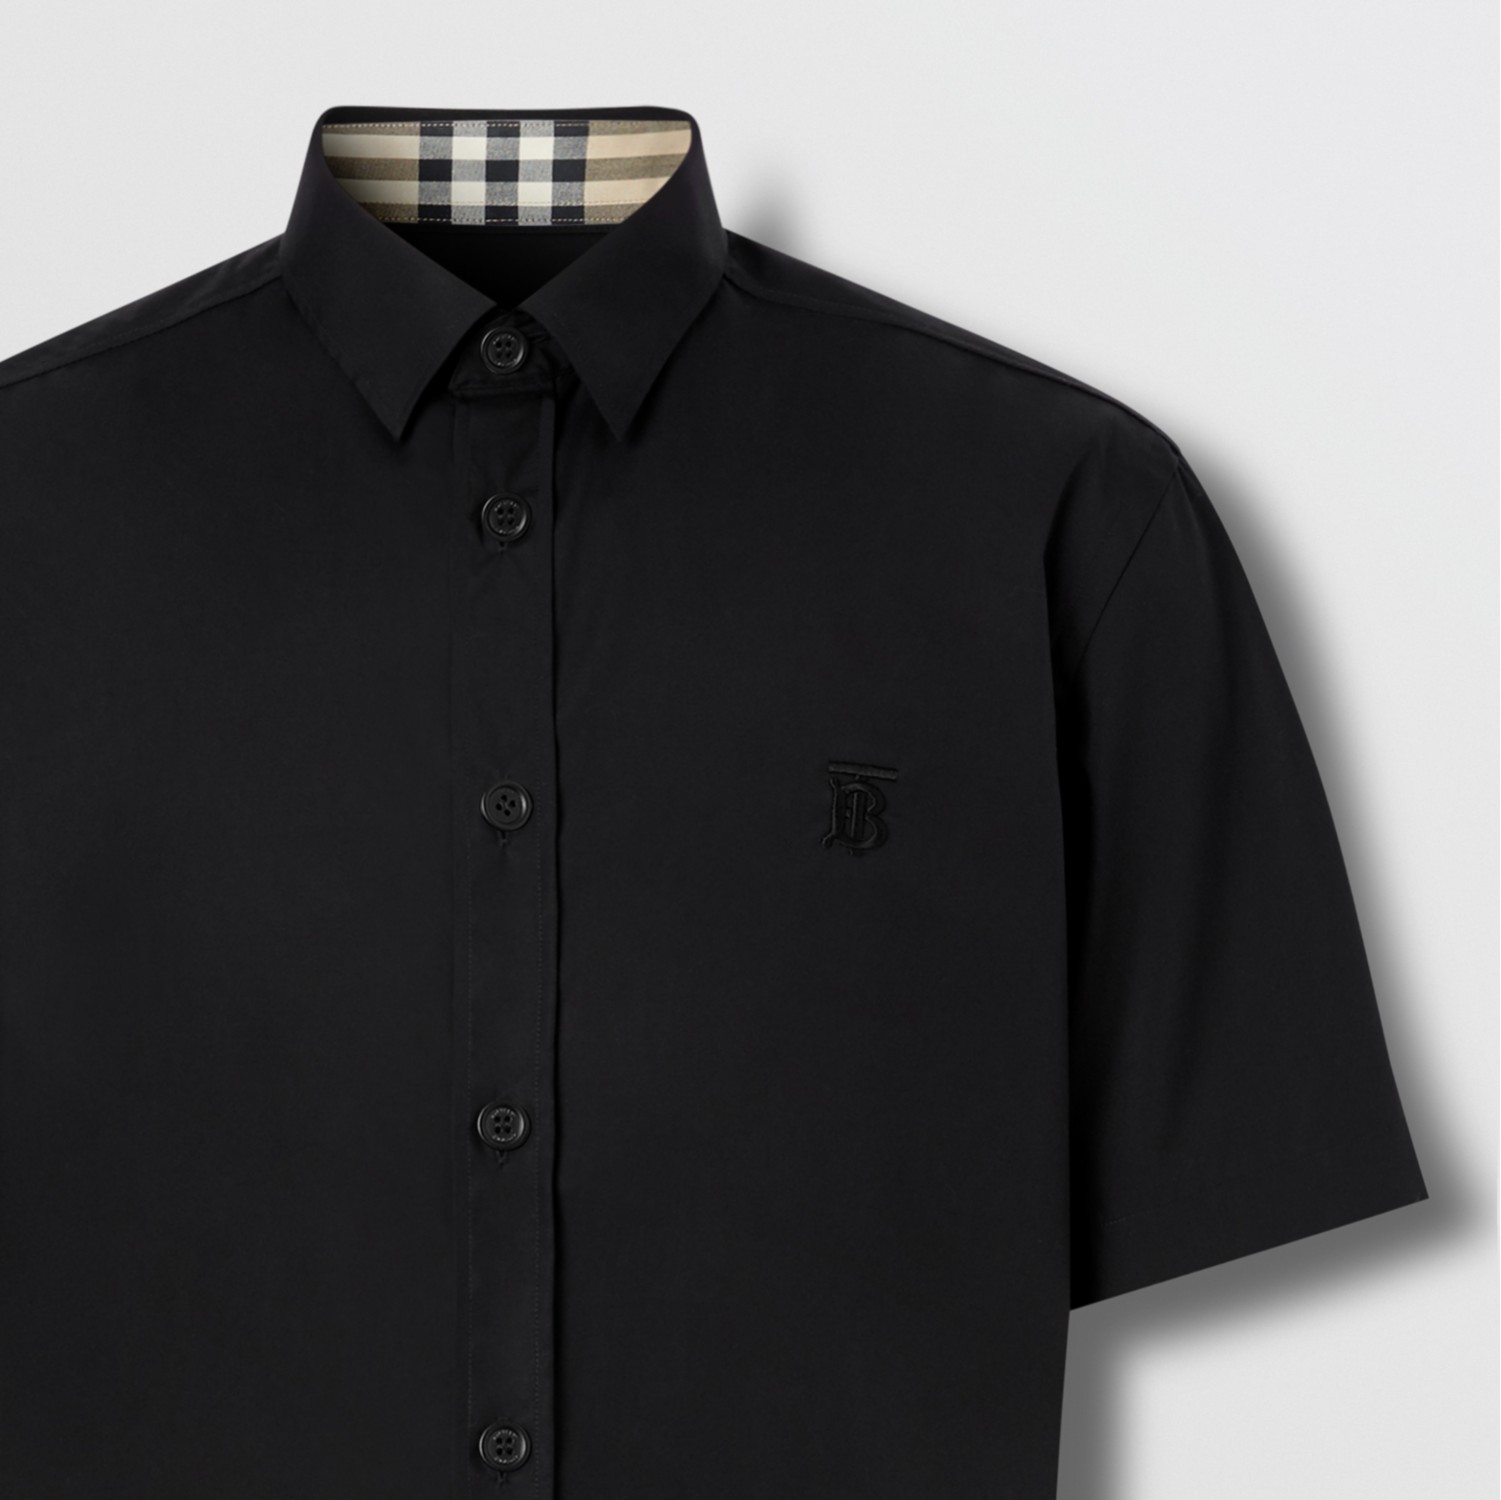 Black Cotton Button up Shirt for Men Short Sleeved Button Down 